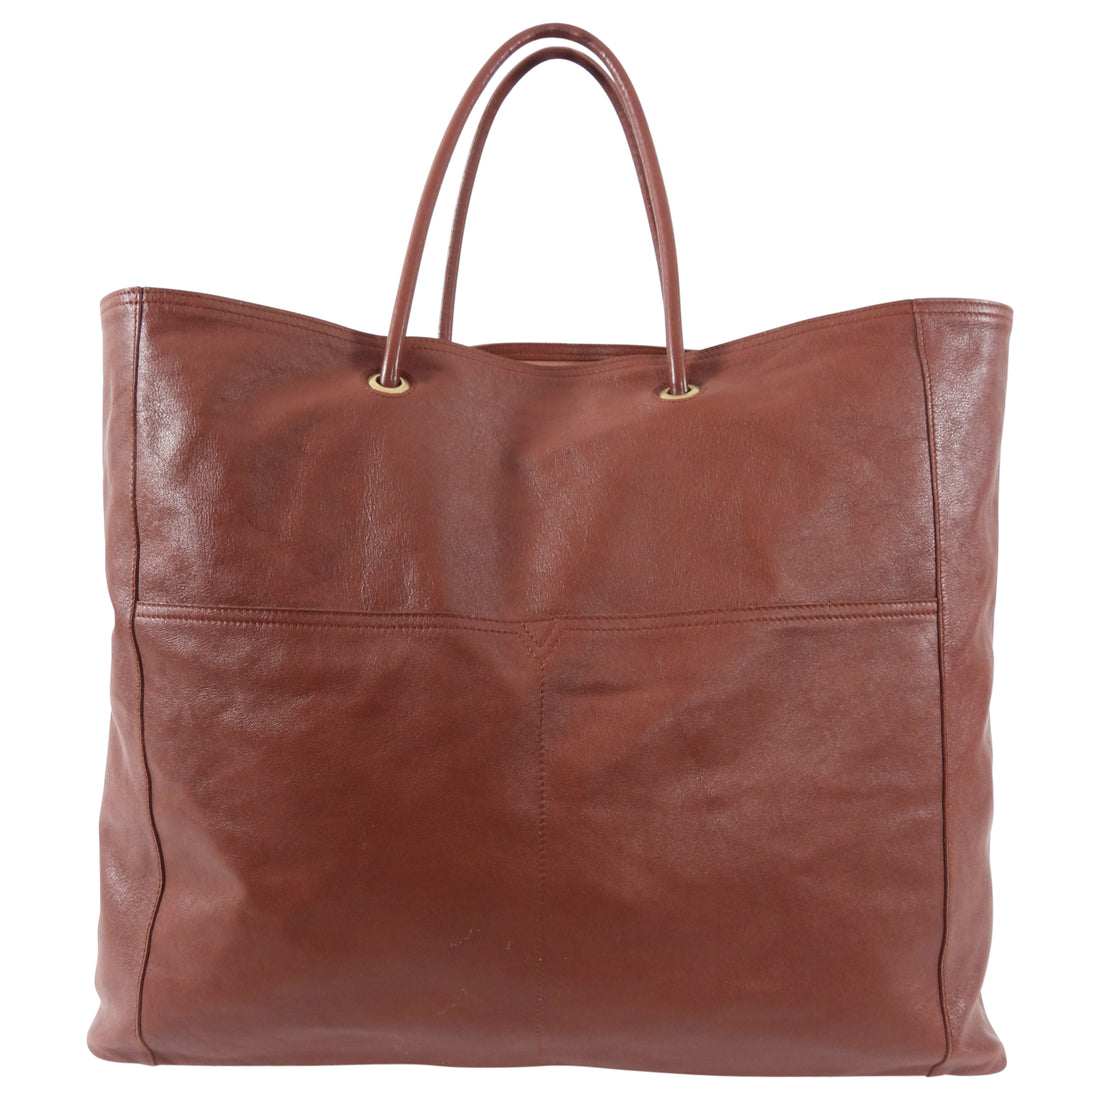 Yves Saint Laurent Brown Leather Large Sac Chyc Tote Bag